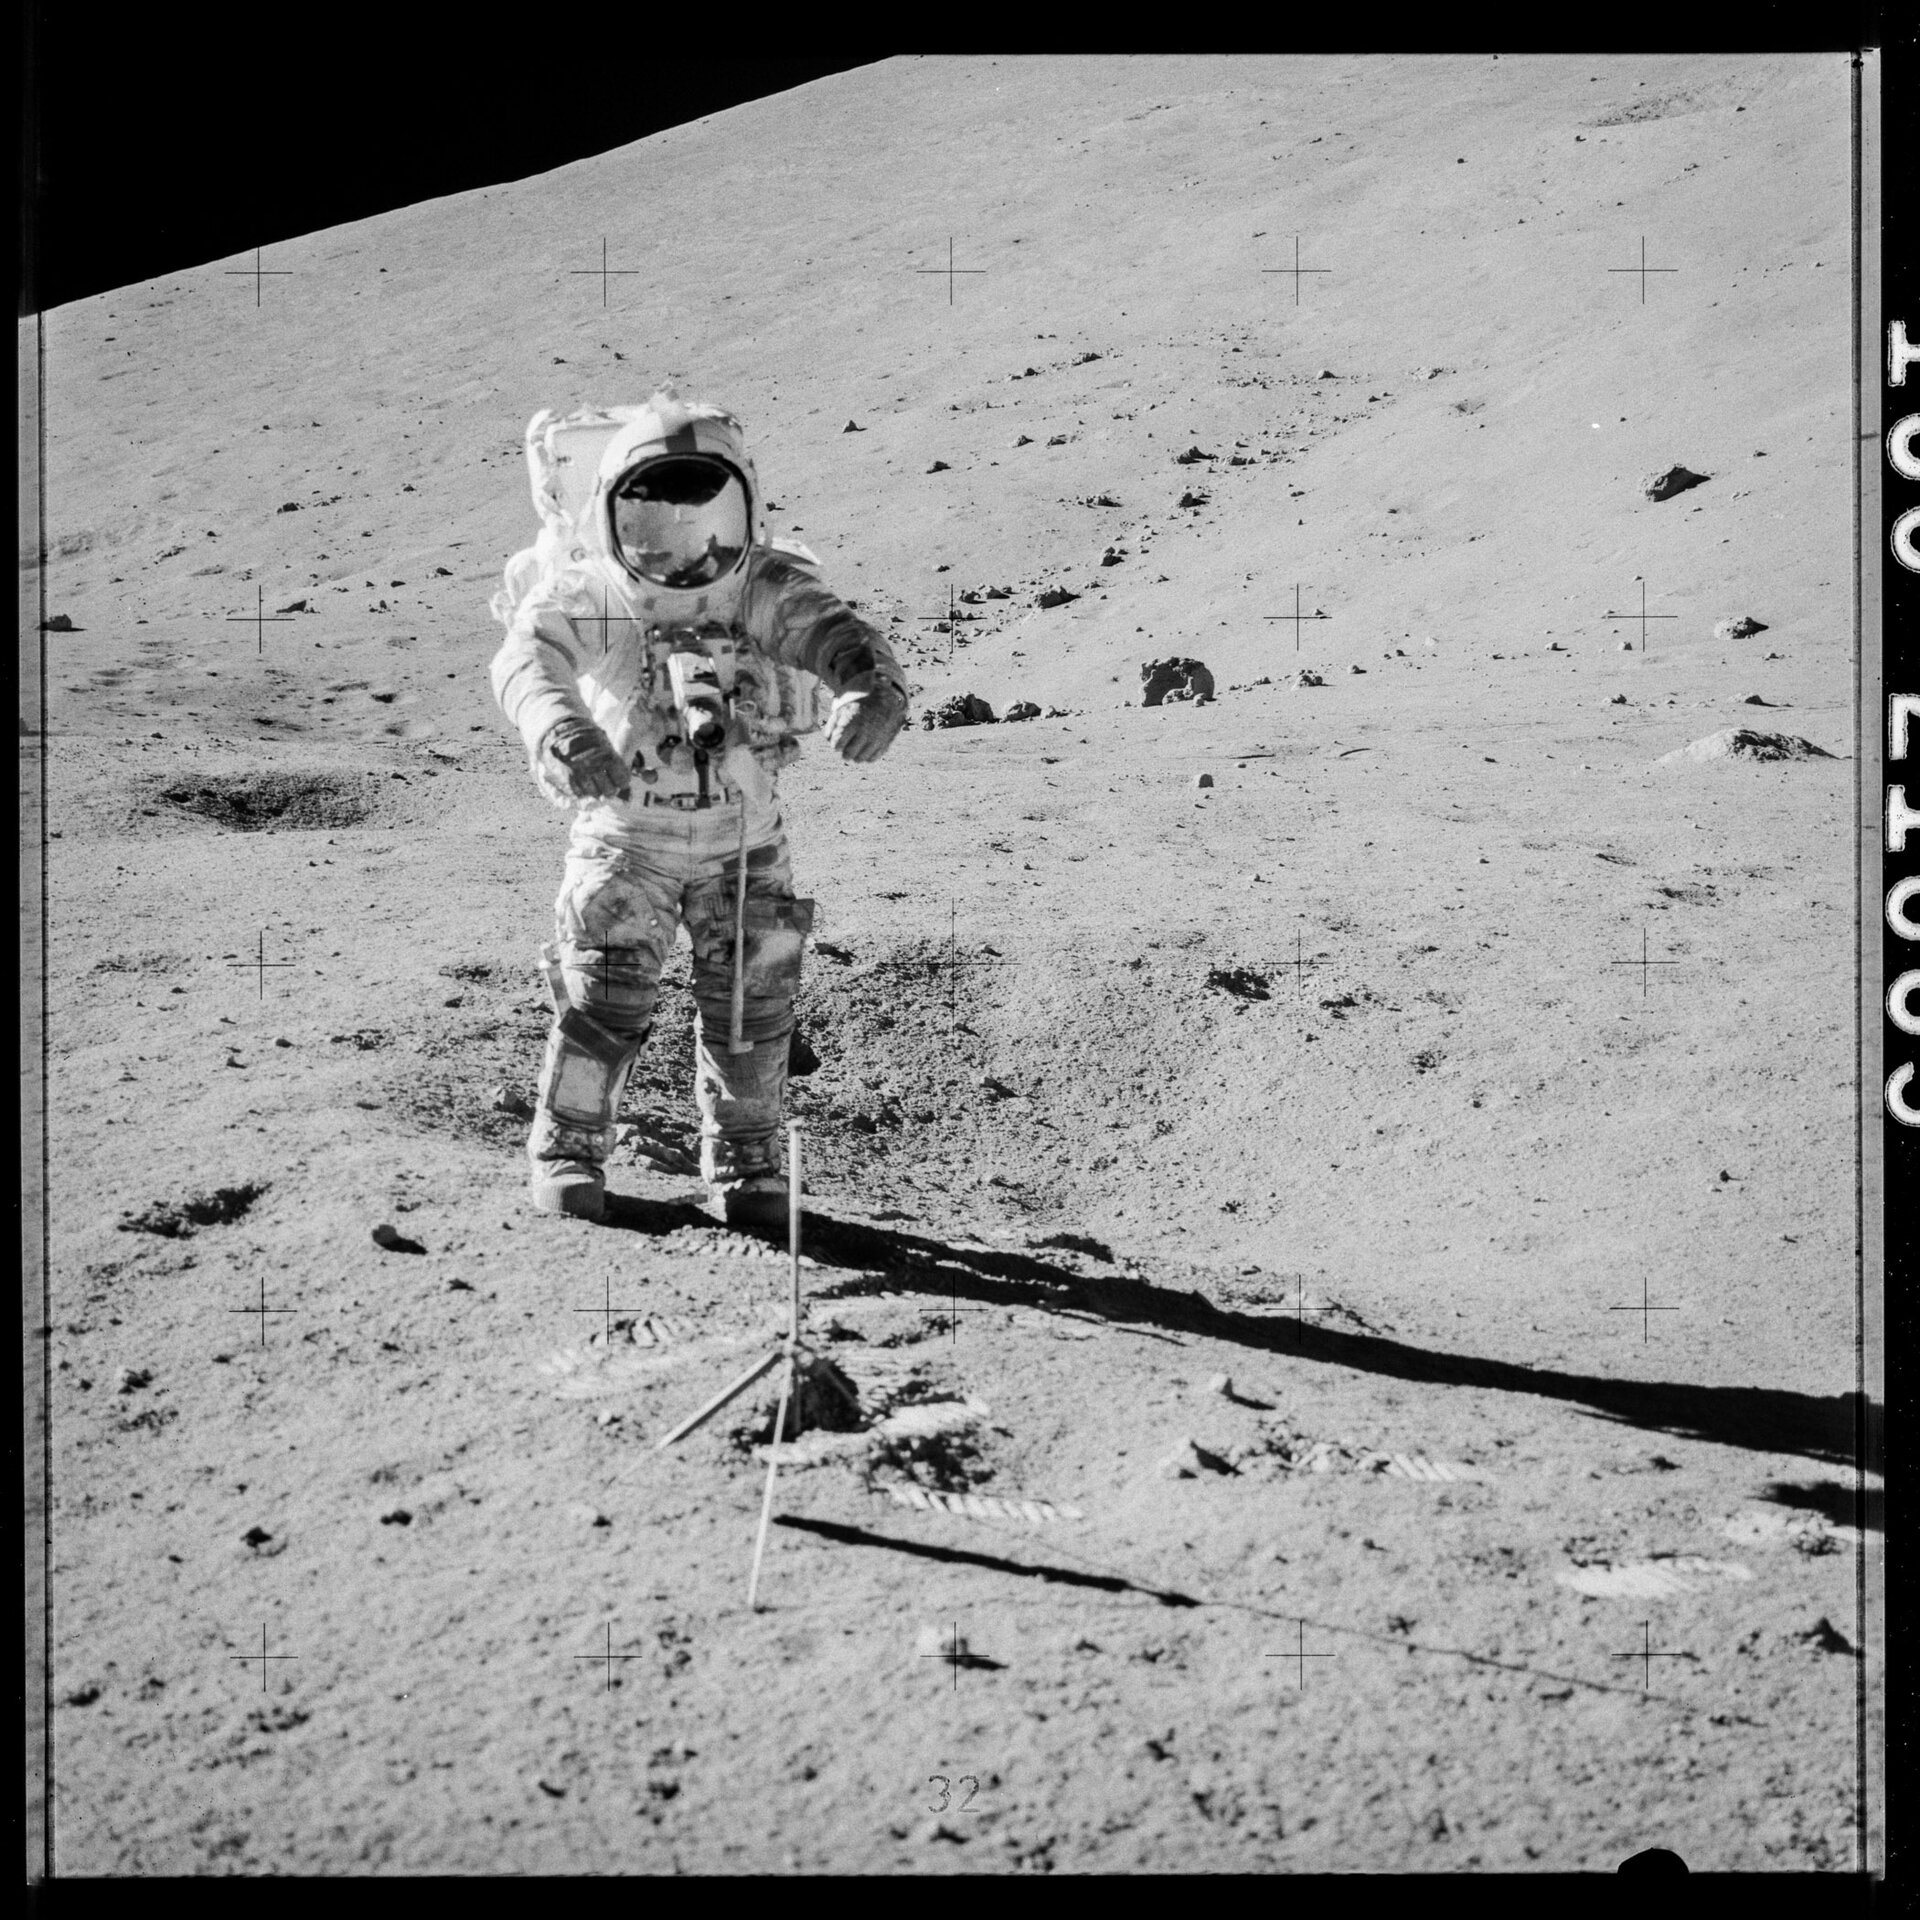 Astronaut Gene Cernan collecting lunar samples in 1972. Credit: ESA